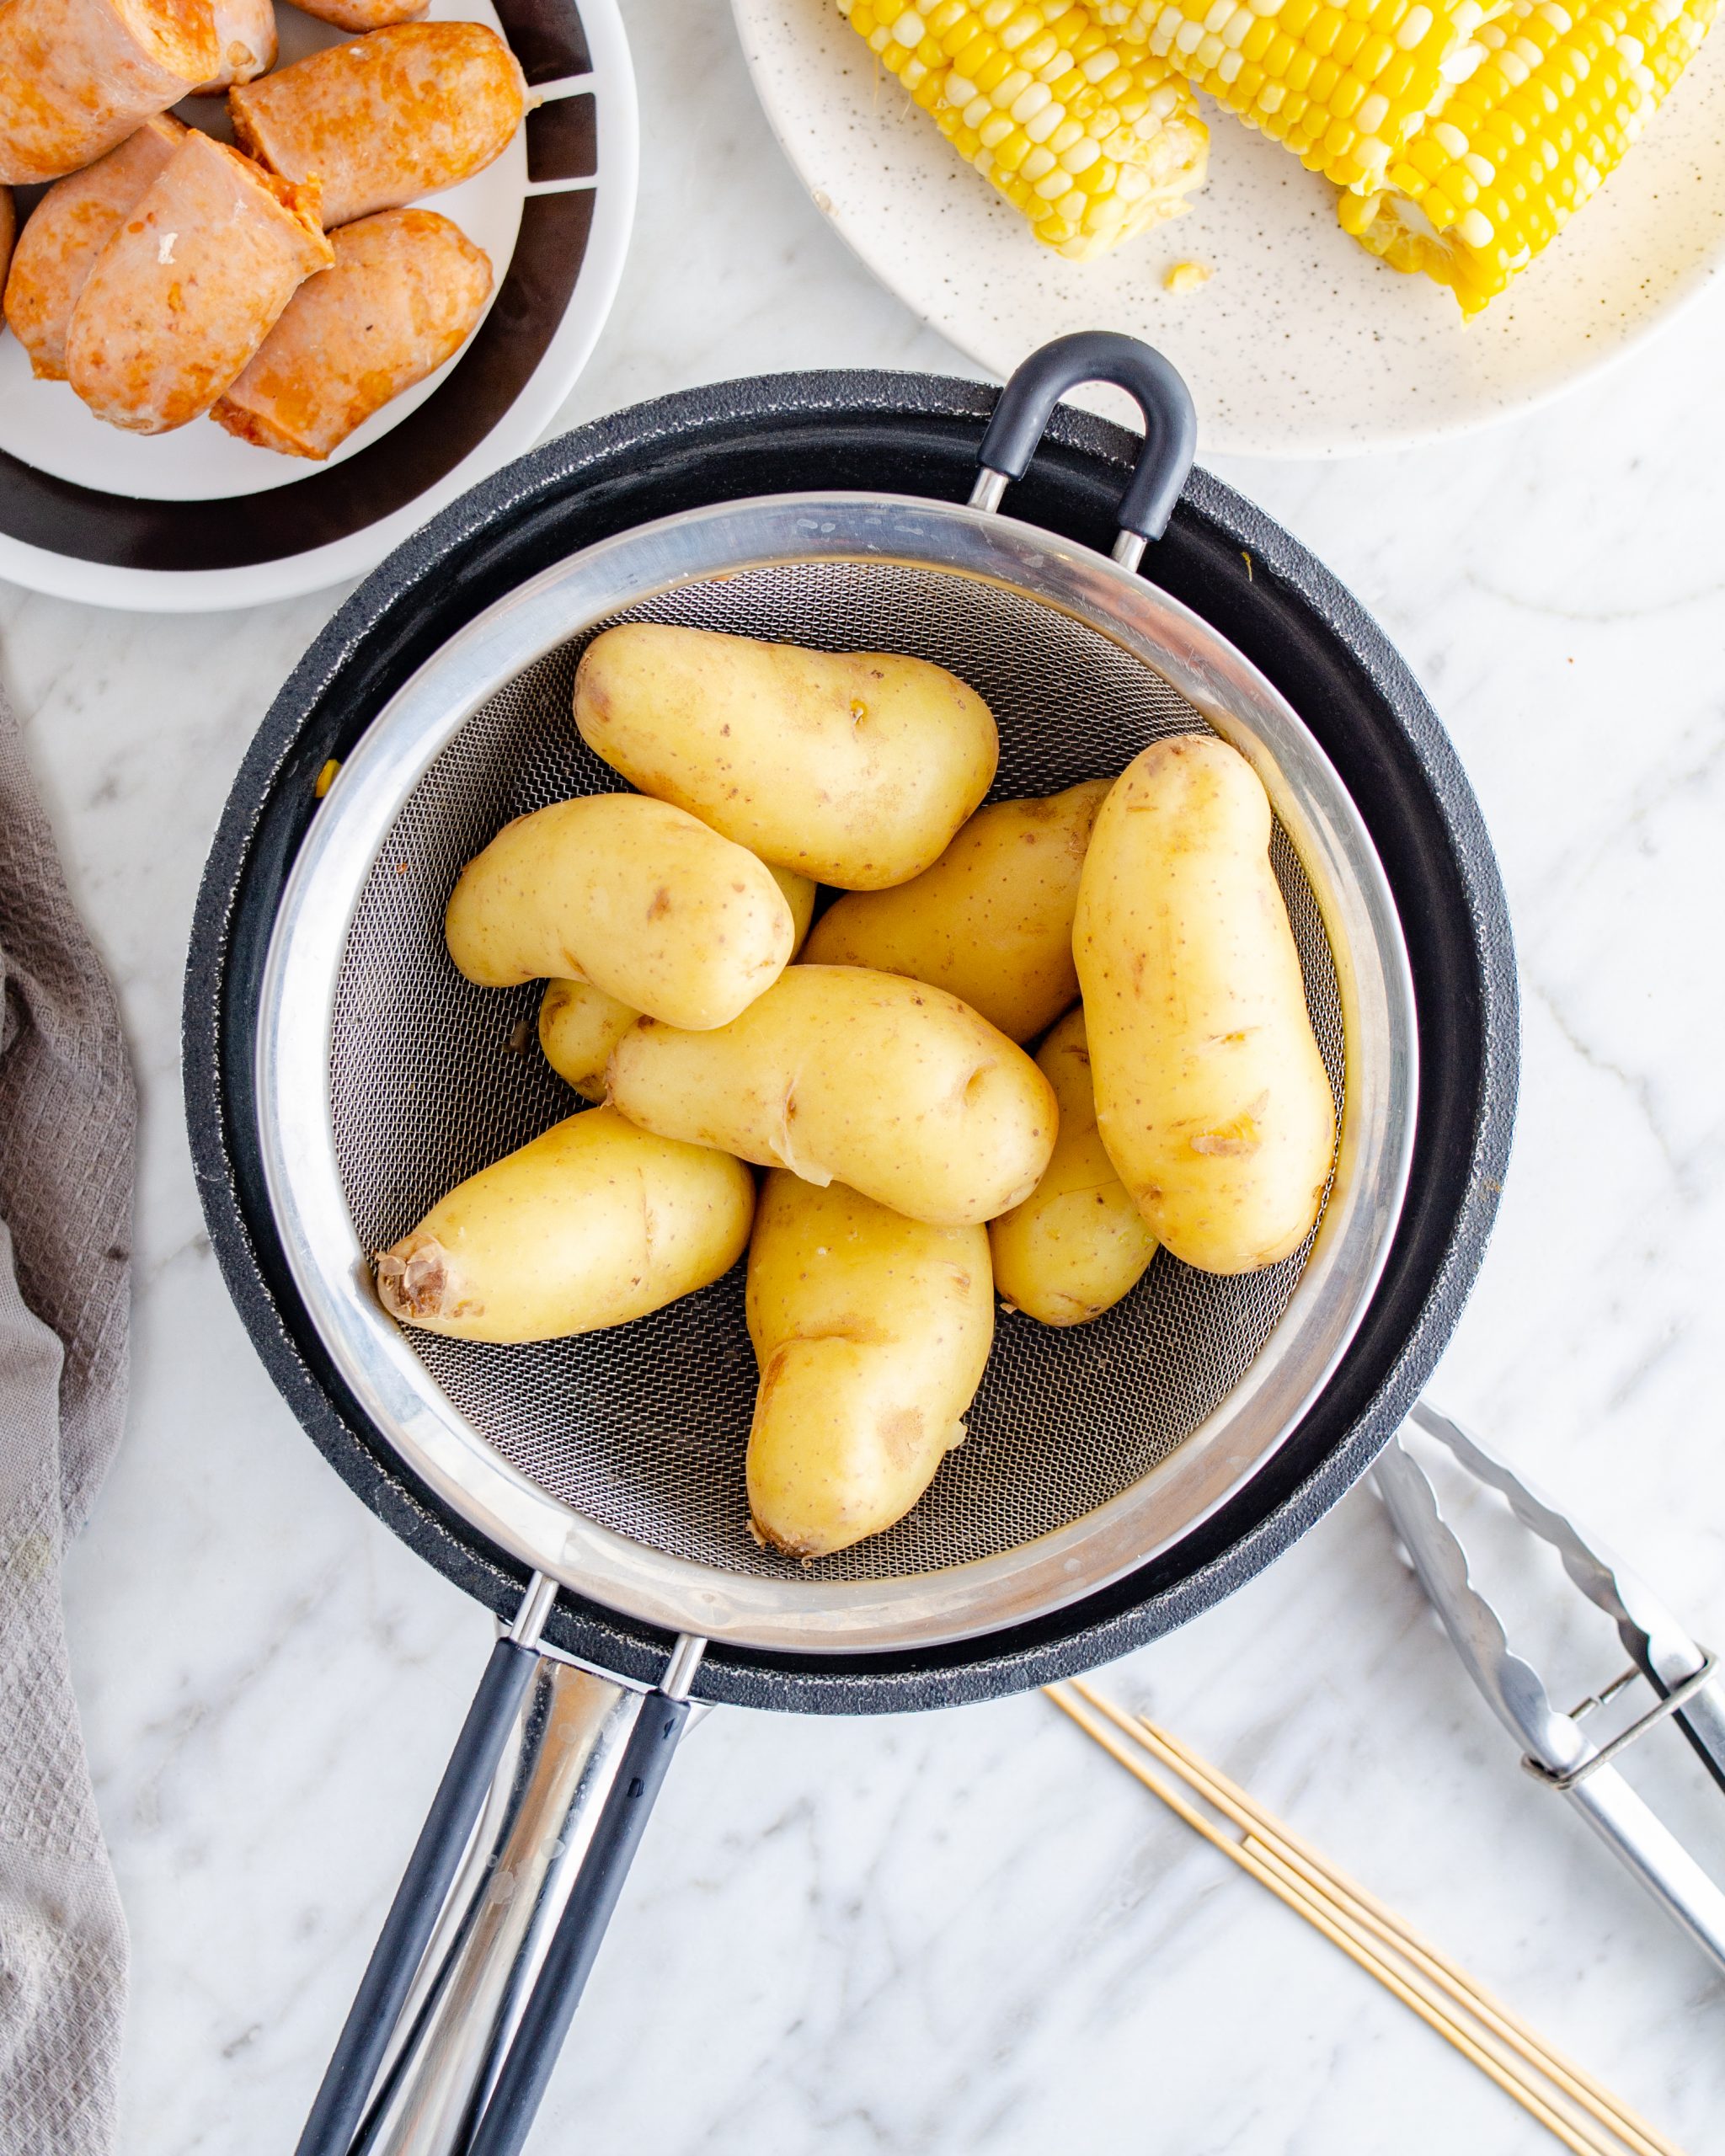 Boil the potatoes in salted water until tender. 